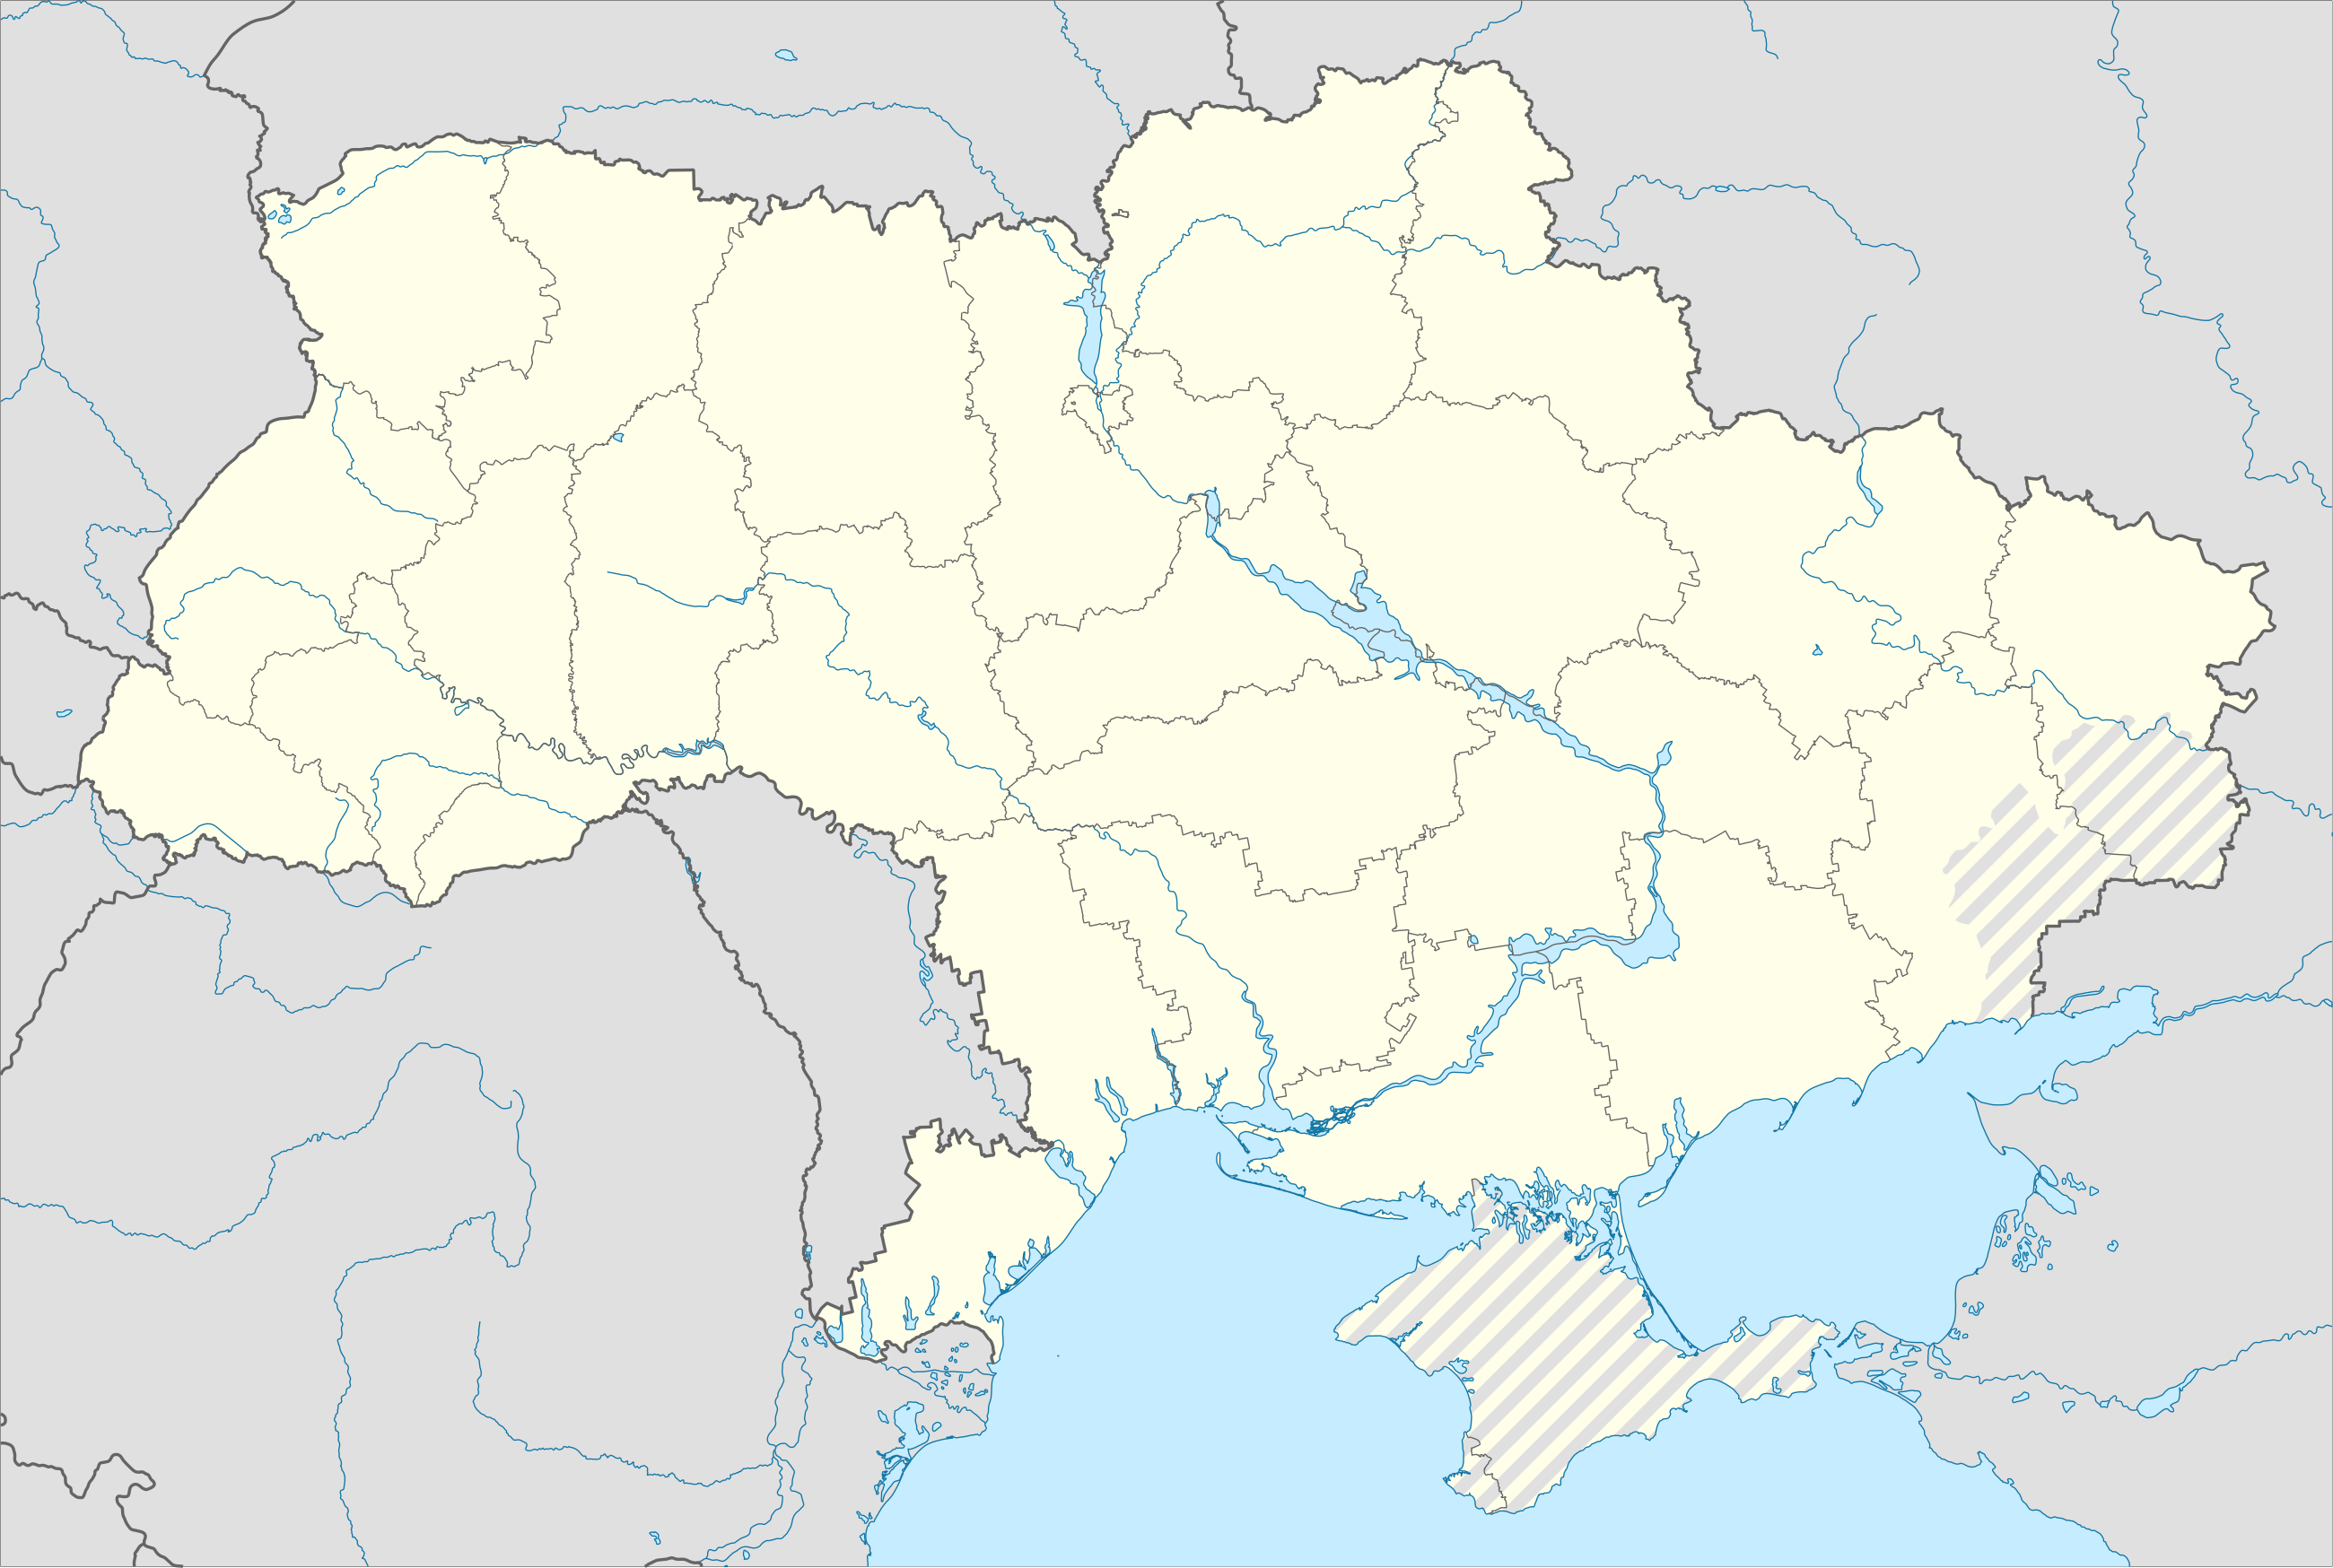 CircularToucan/sandbox is located in Ukraine